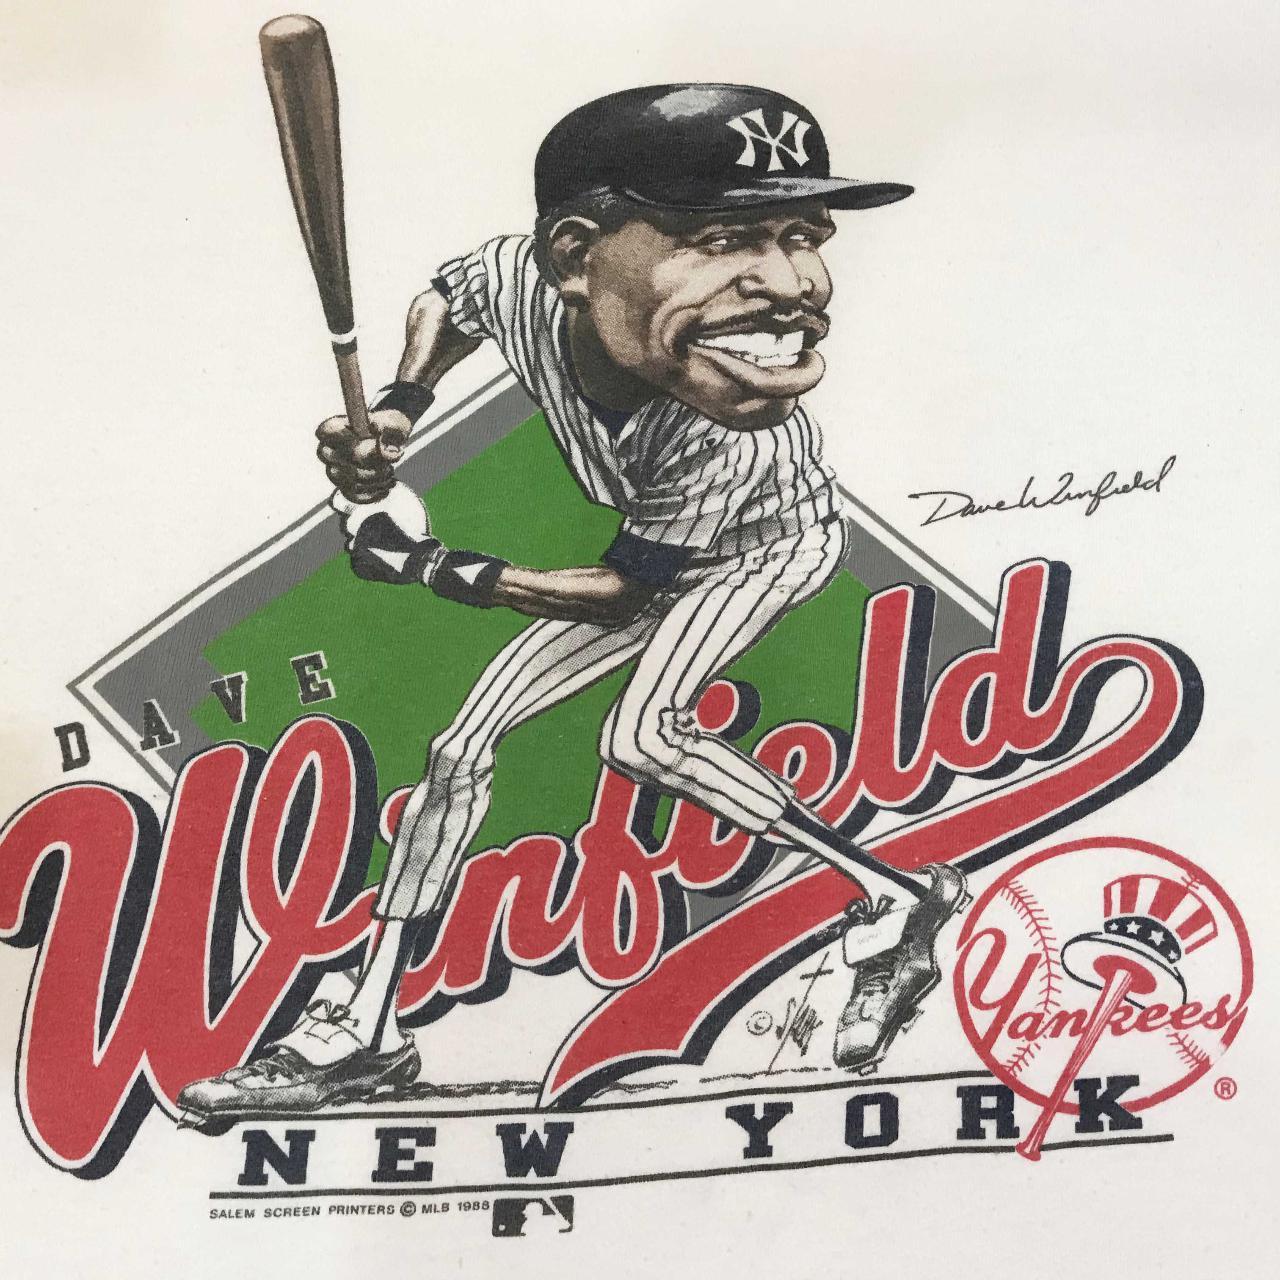 Dave Winfield Kids T-Shirt - New York Baseball Dave Winfield Retro Wht